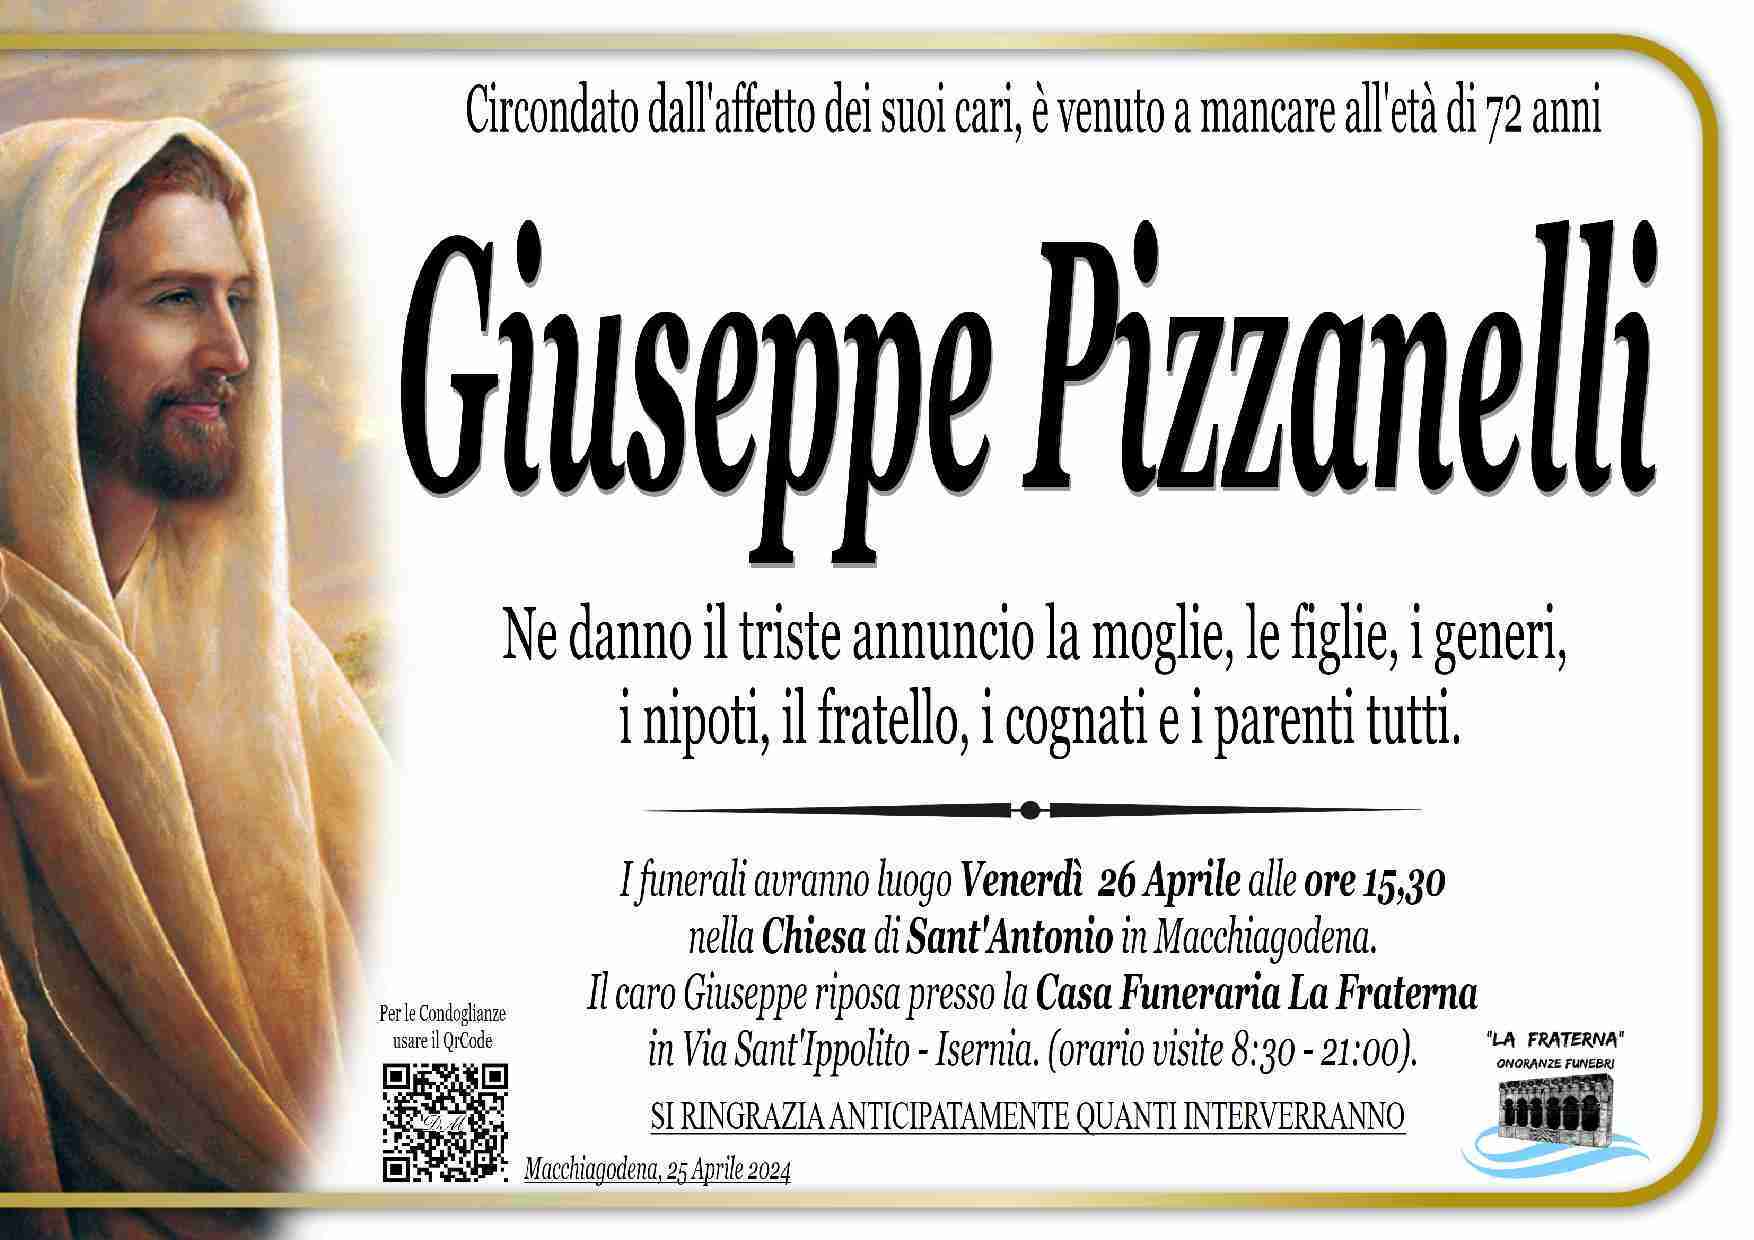 Giuseppe Pizzanelli